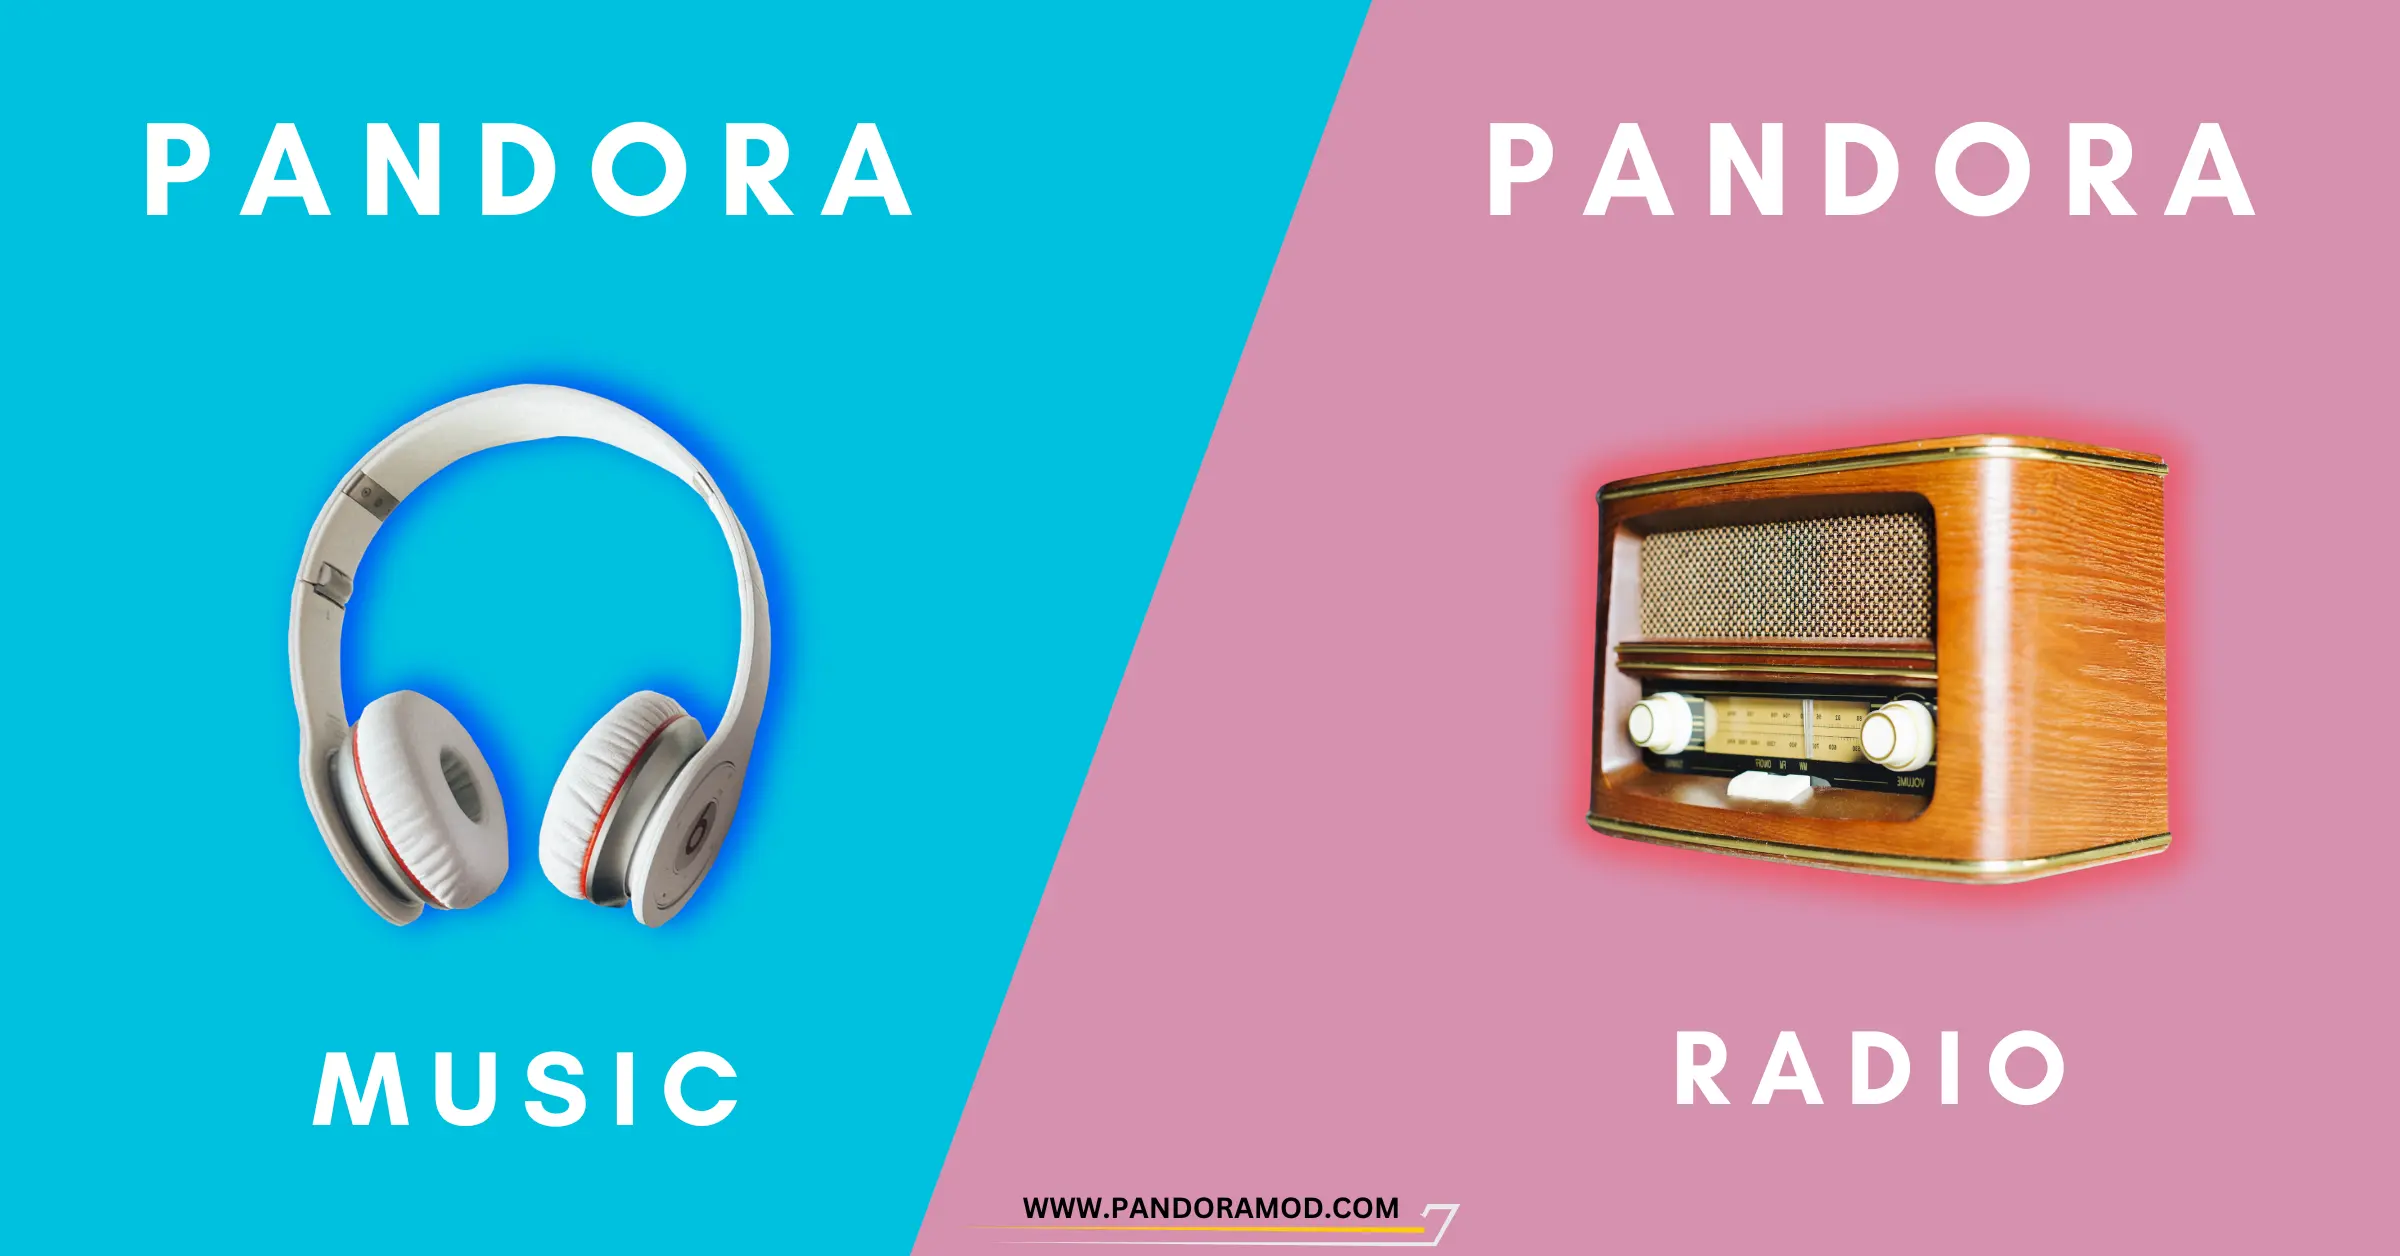 Differentiate between pandora music and pandora radio